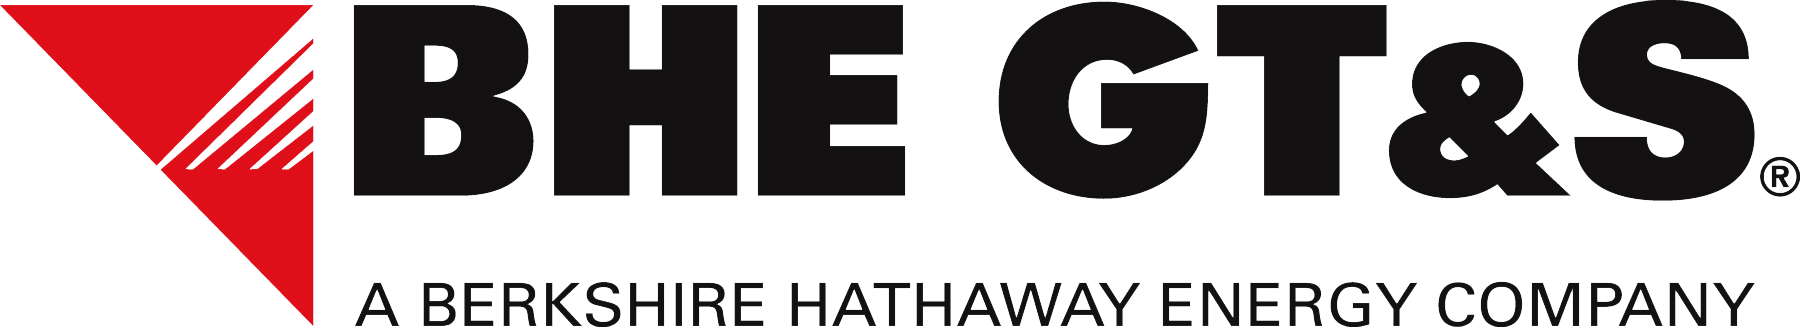 BHE-GTS logo